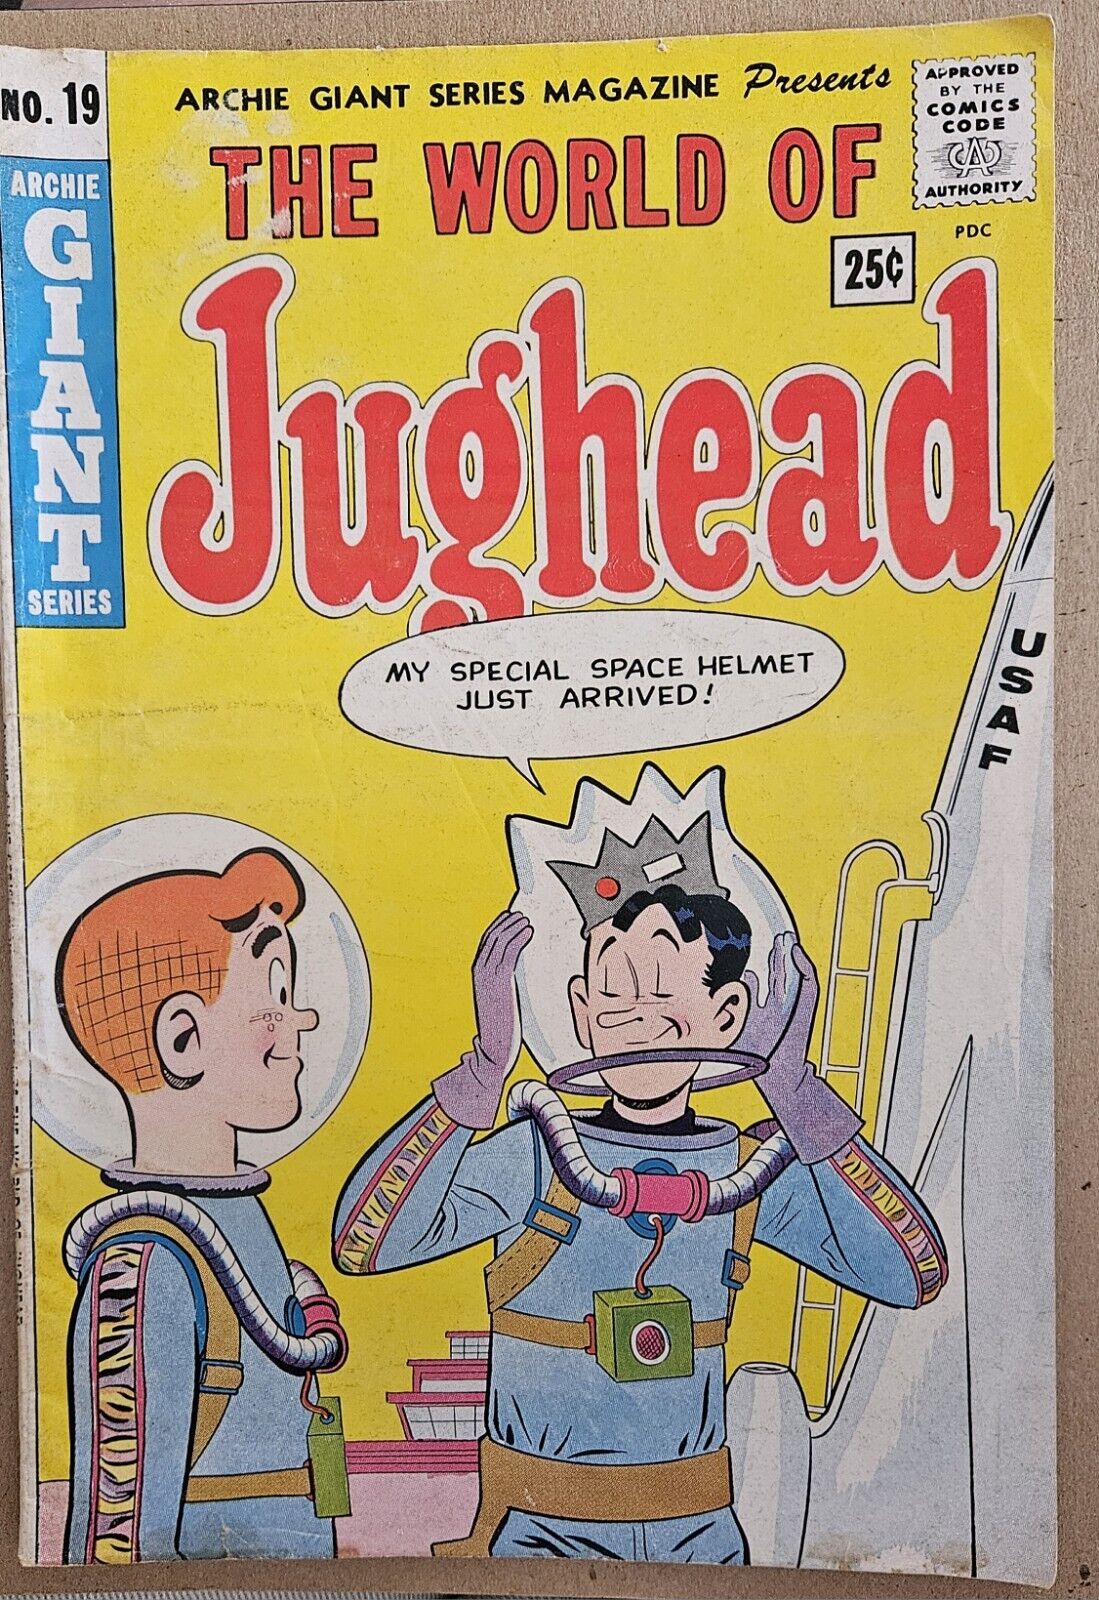 1962 The World Of Jughead No 19 comic book